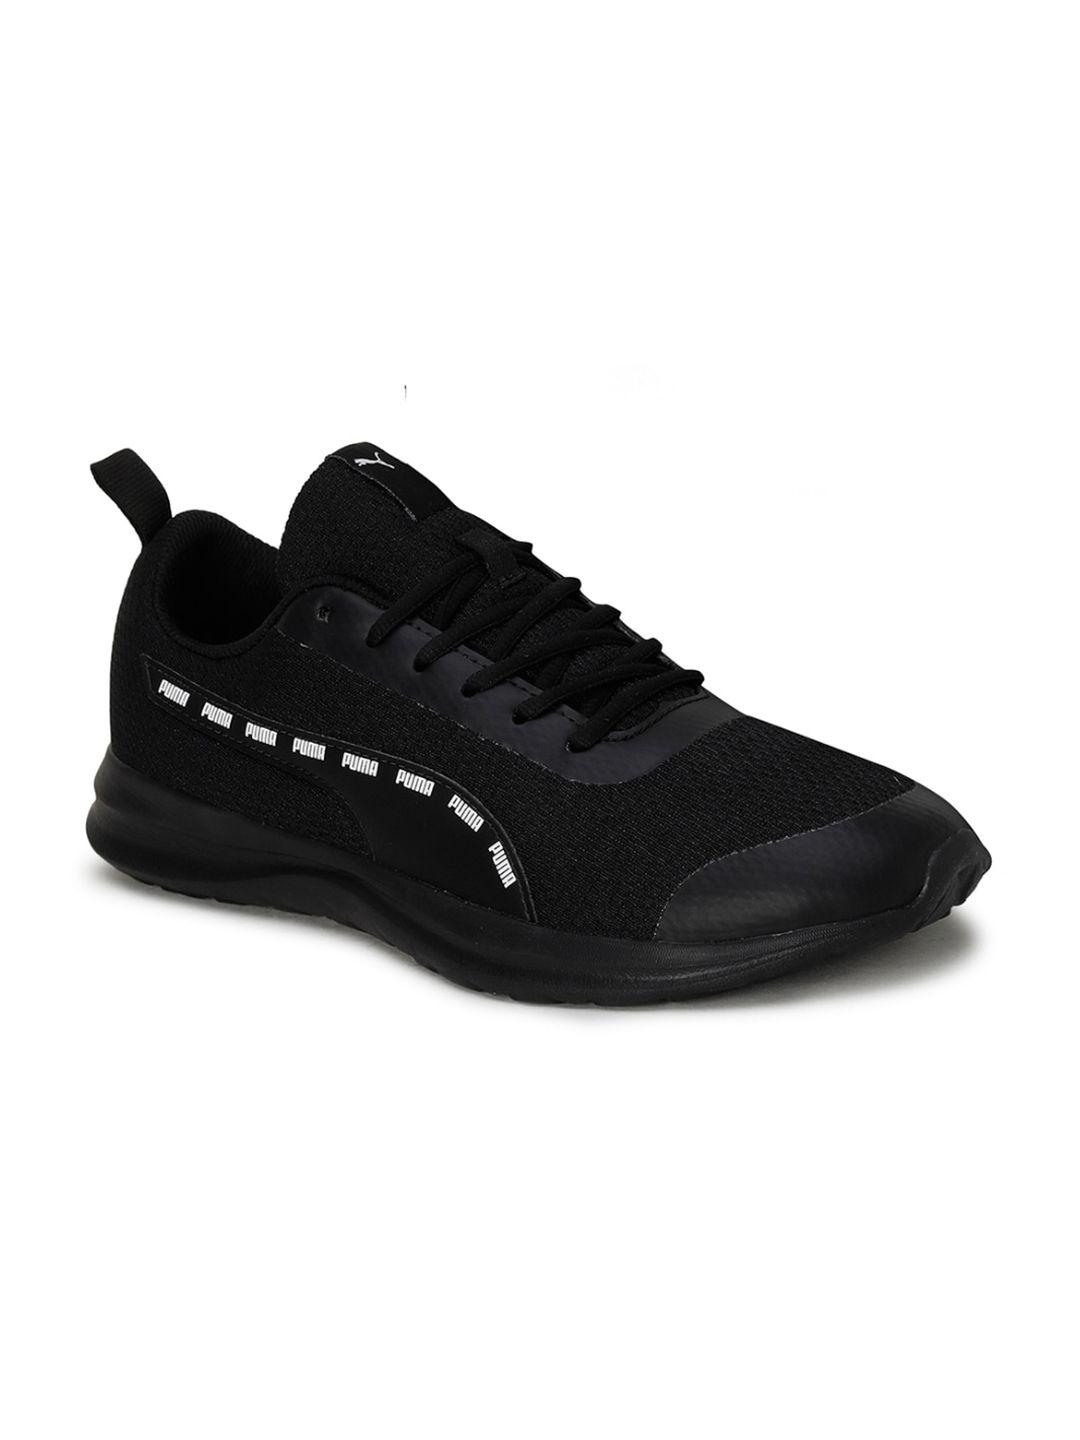 puma-men-black-lite-pro-sneakers